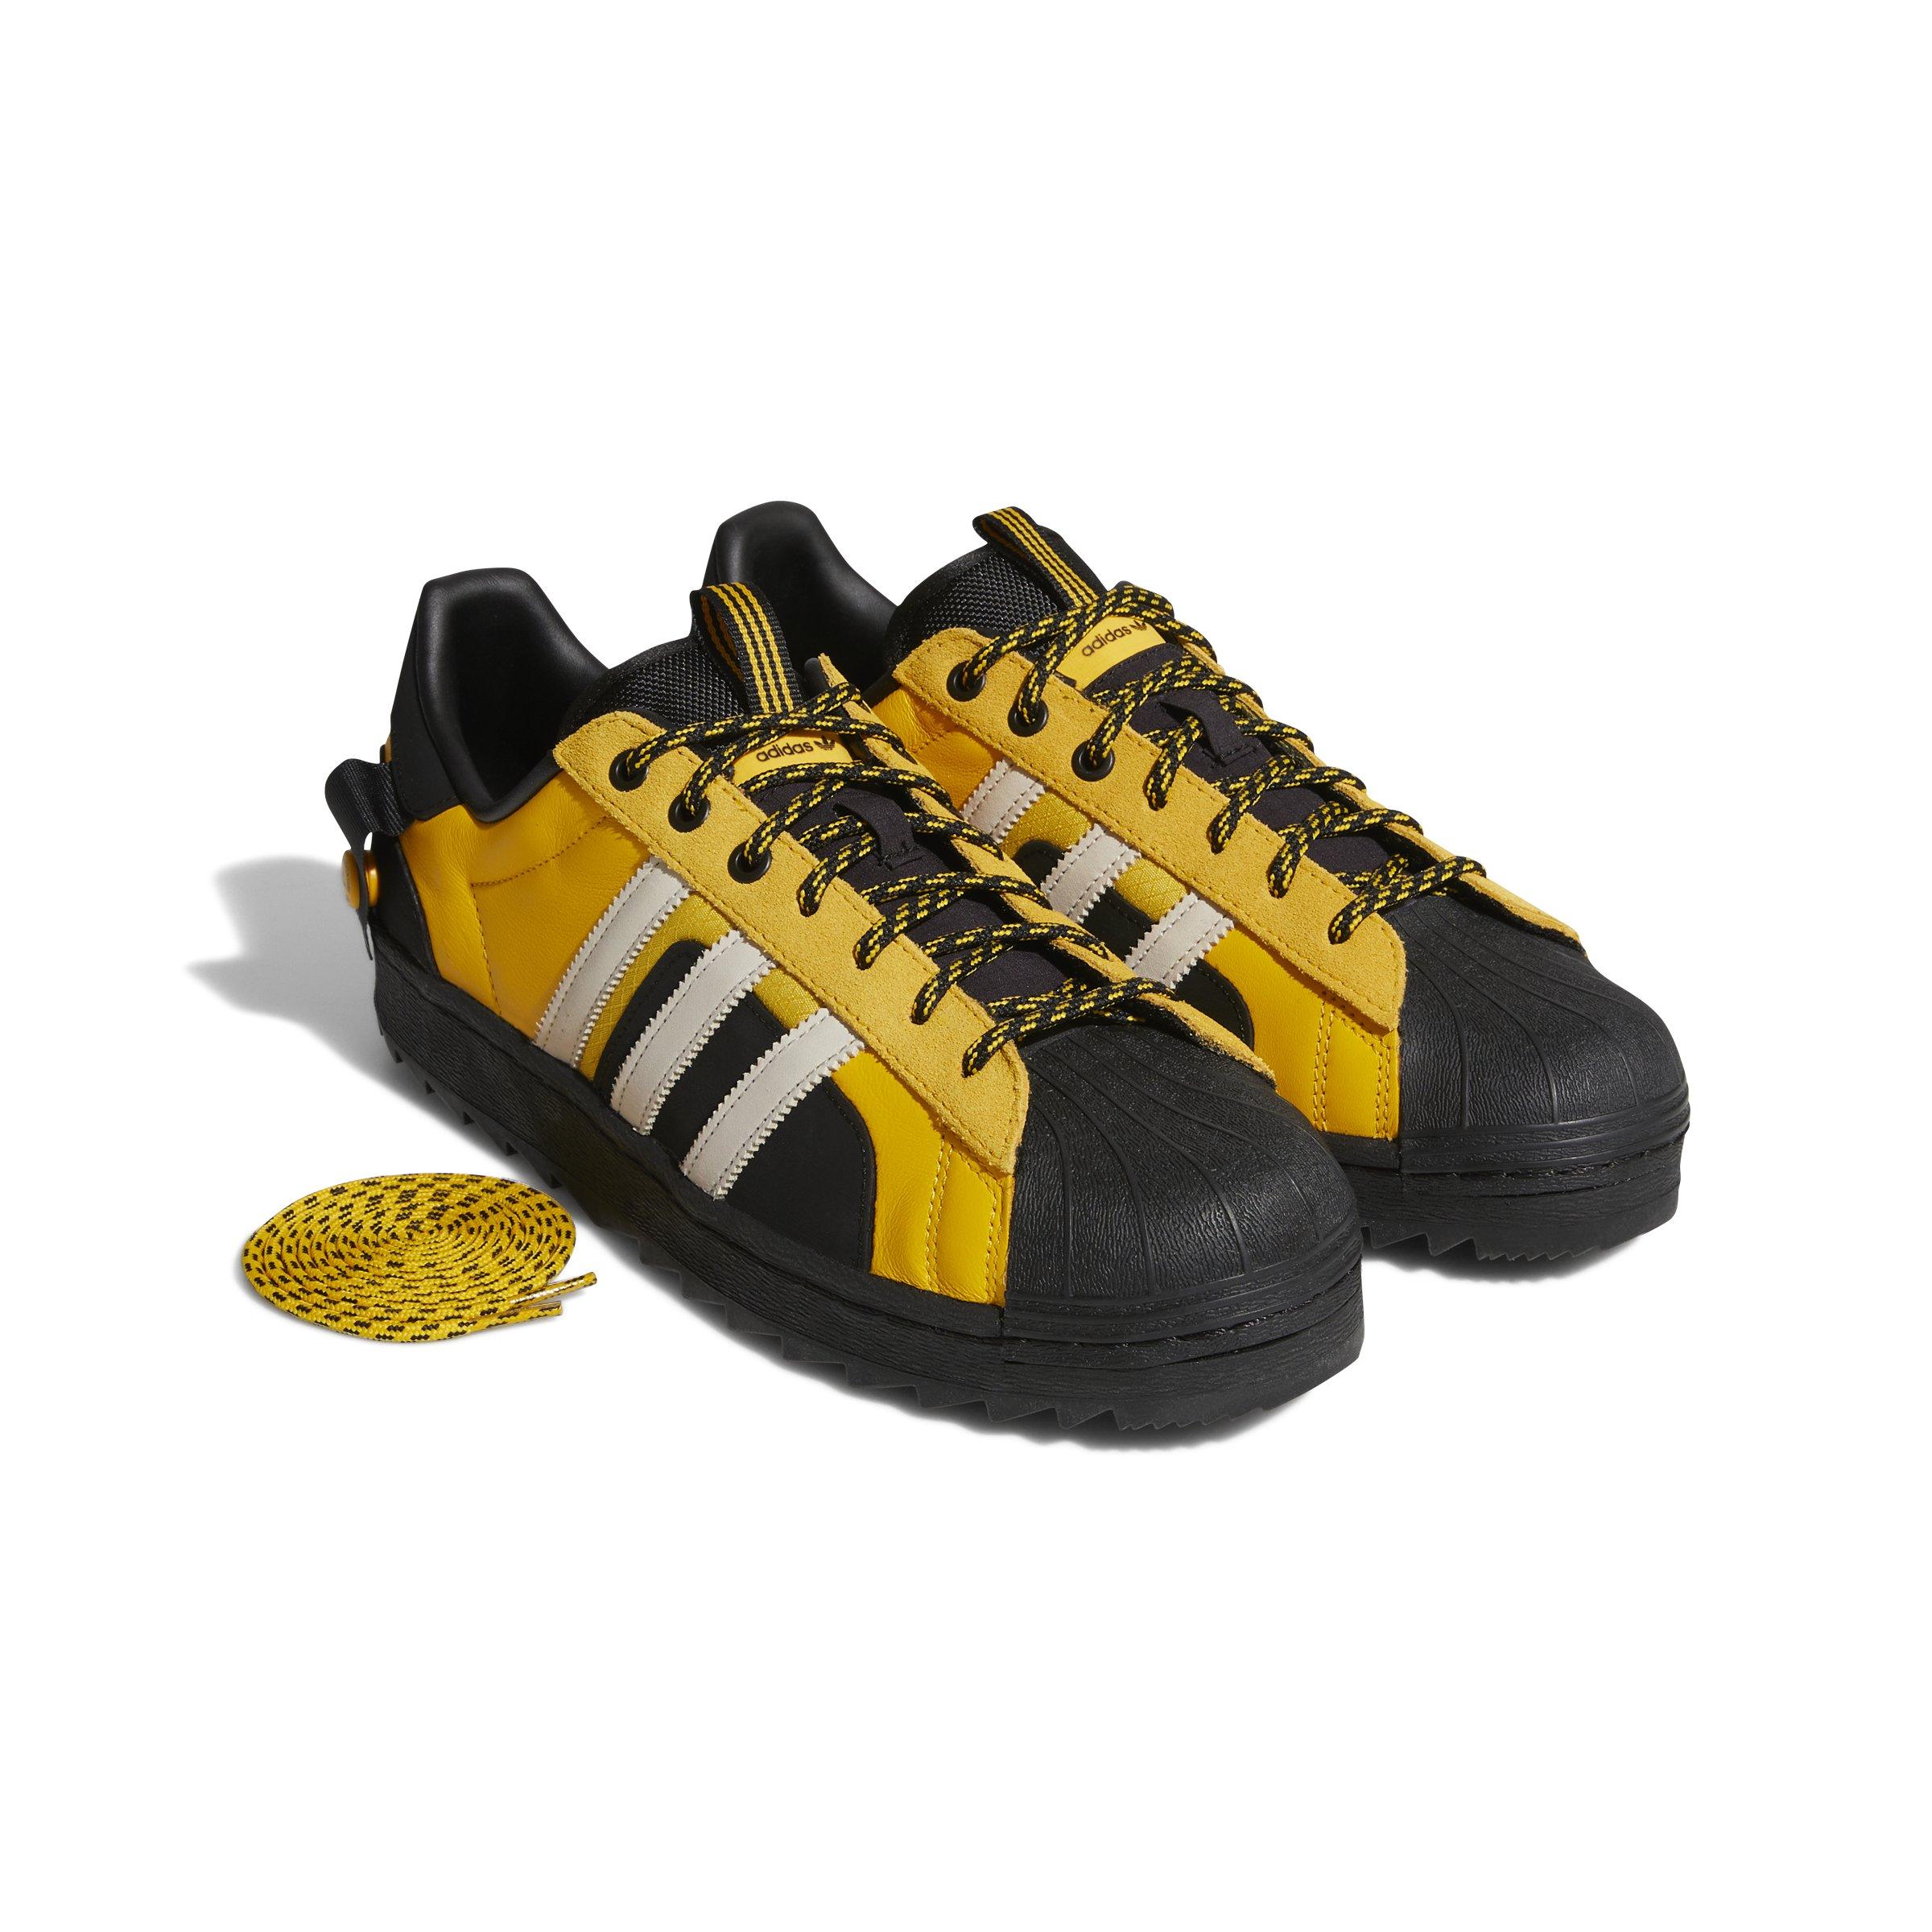 adidas Superstar "Core Black/Yellow/White" Men's Shoe